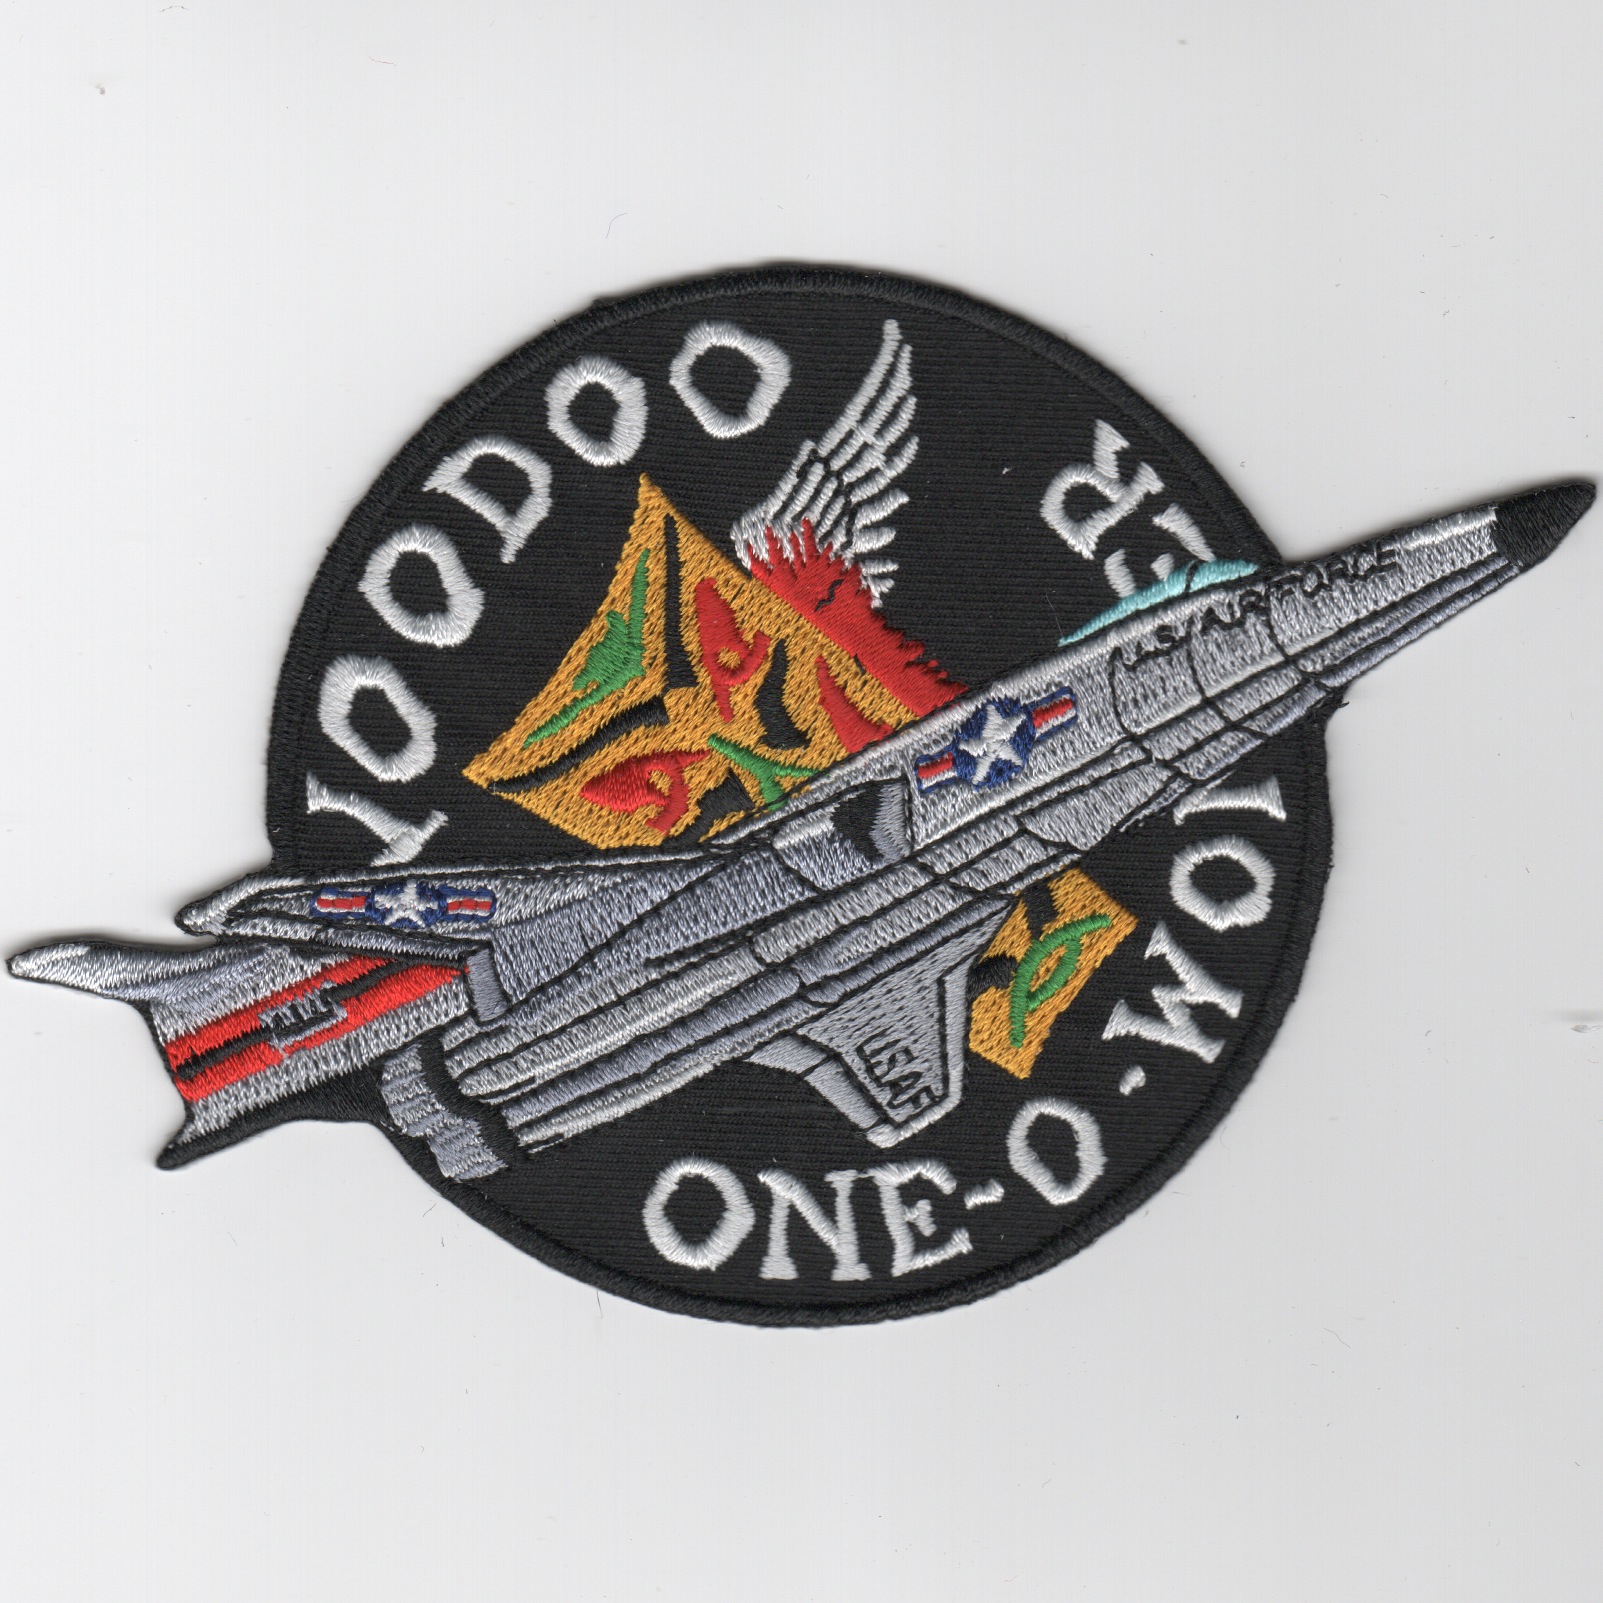 F-101 'VOODOO' One-O-Wonder Patch